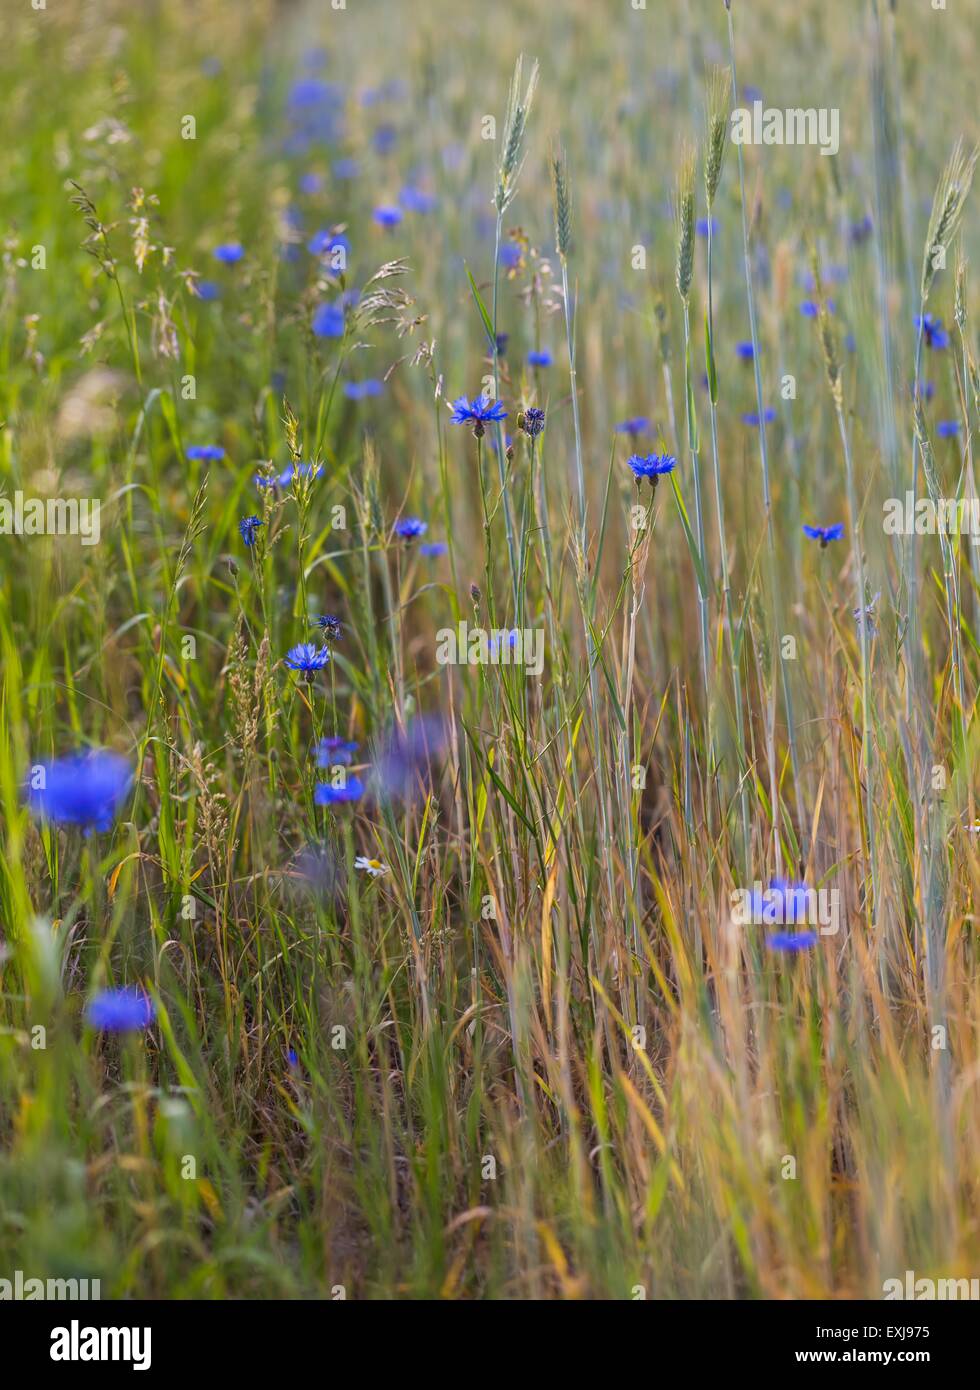 Beautiful cornflowers growing on field of rice. Beautiful blue summer flowers. Stock Photo